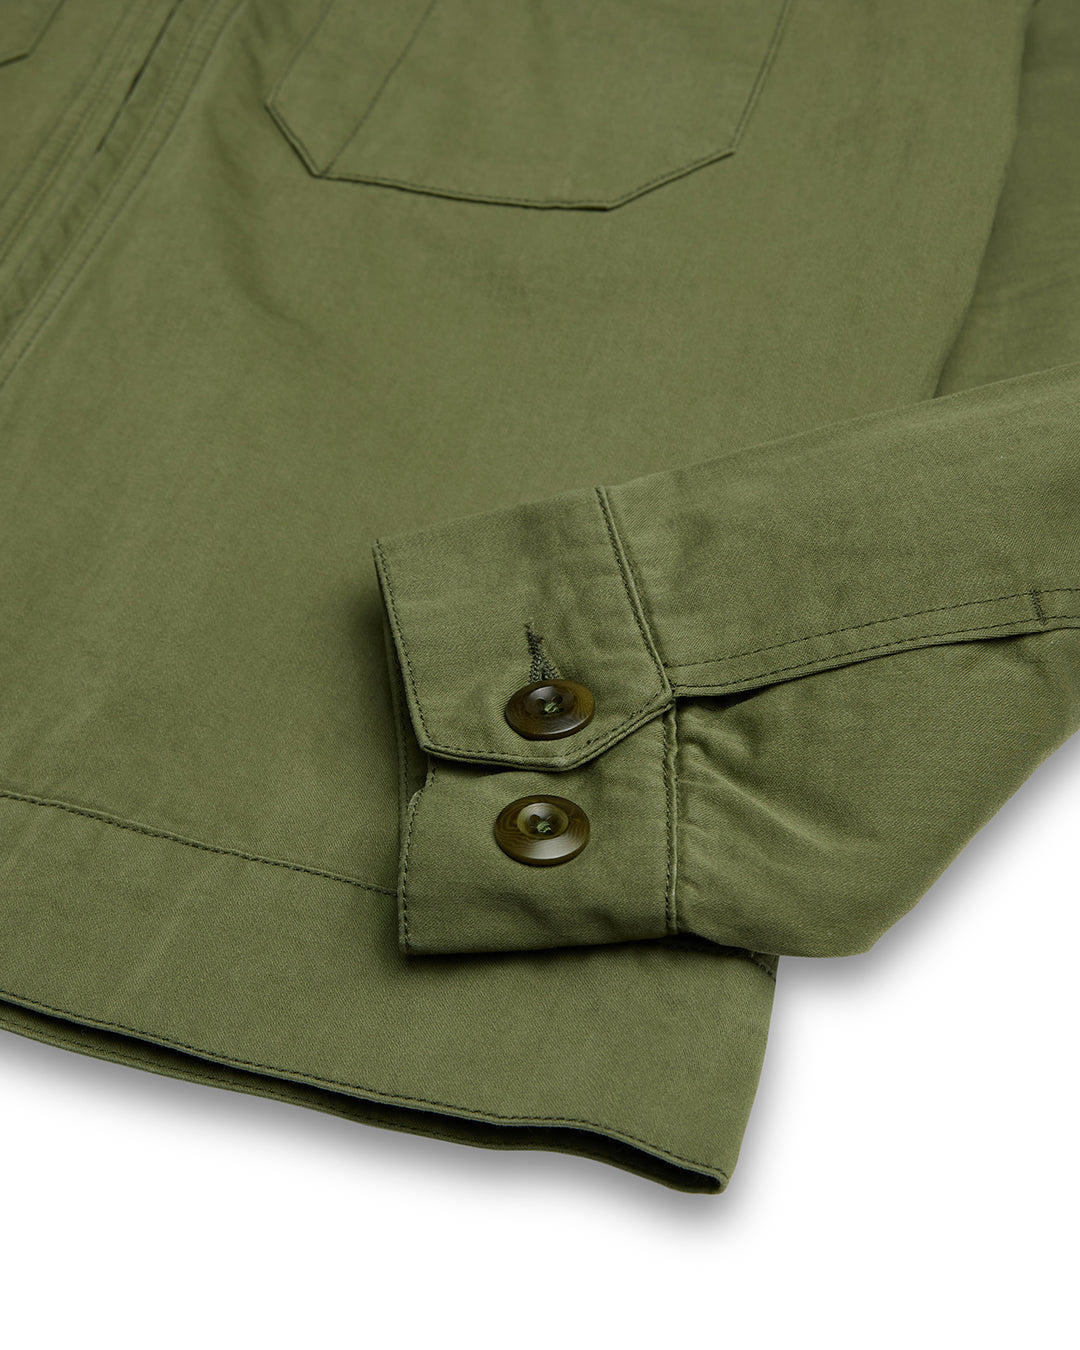 Top Time Workwear Jacket - Lichen Green|Flatlay